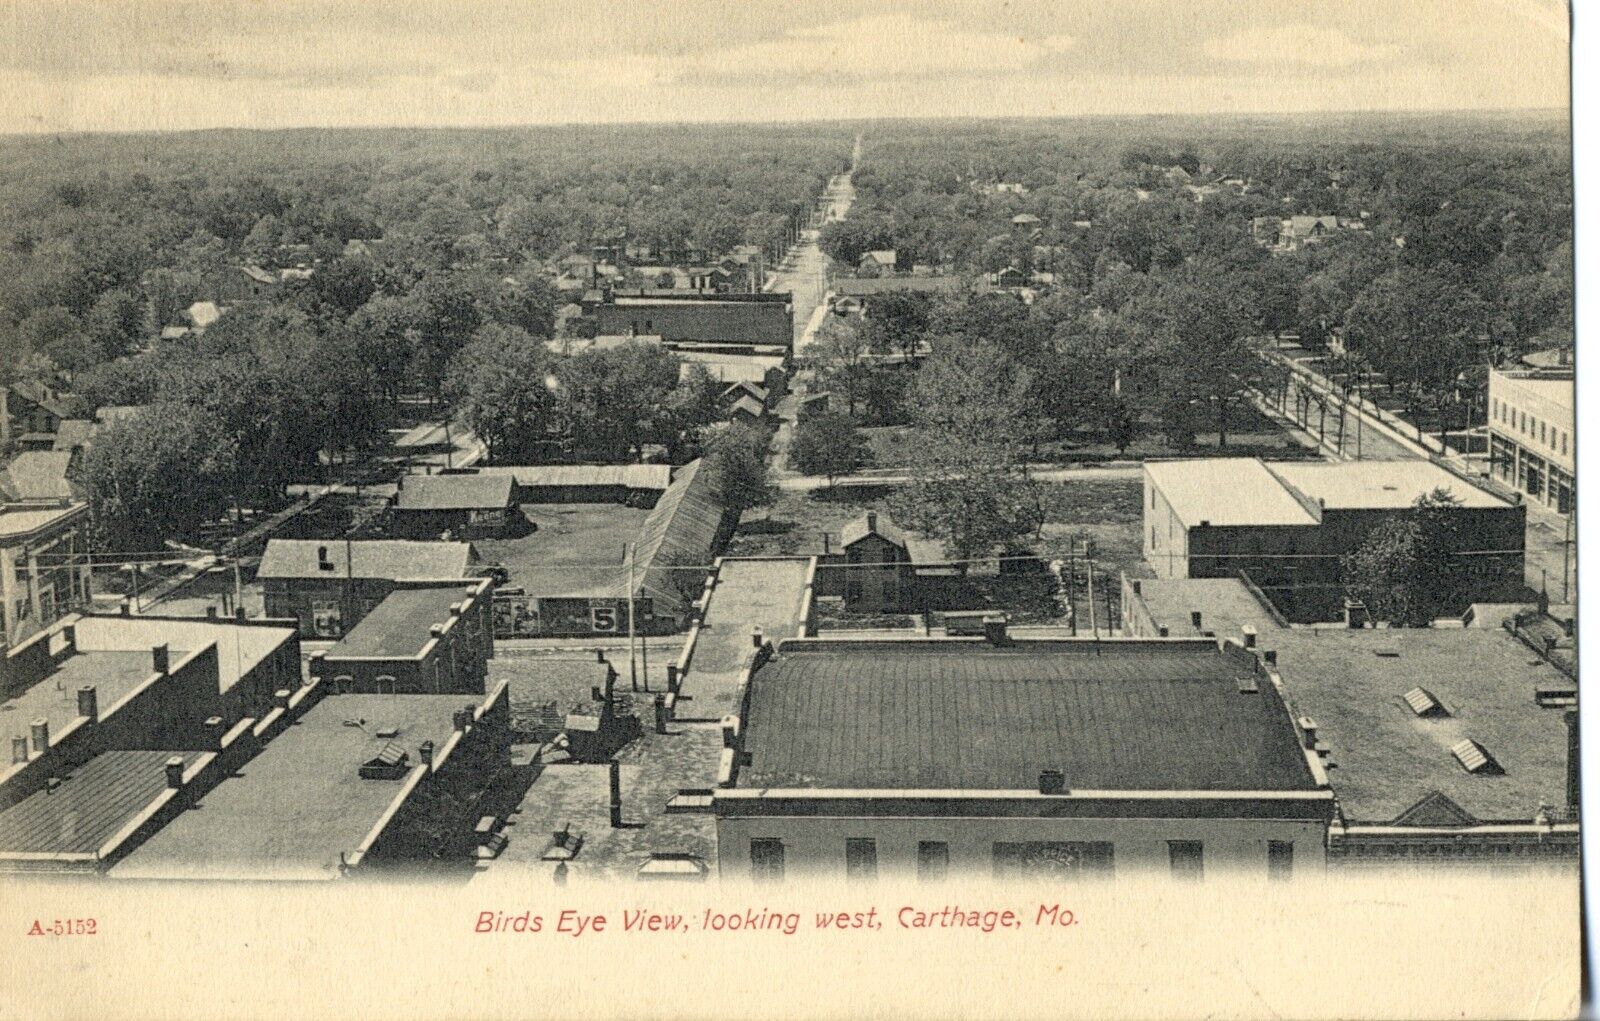 Birds Eye View Looking West, Carthage, Mo. Missouri Postcard #A-5152